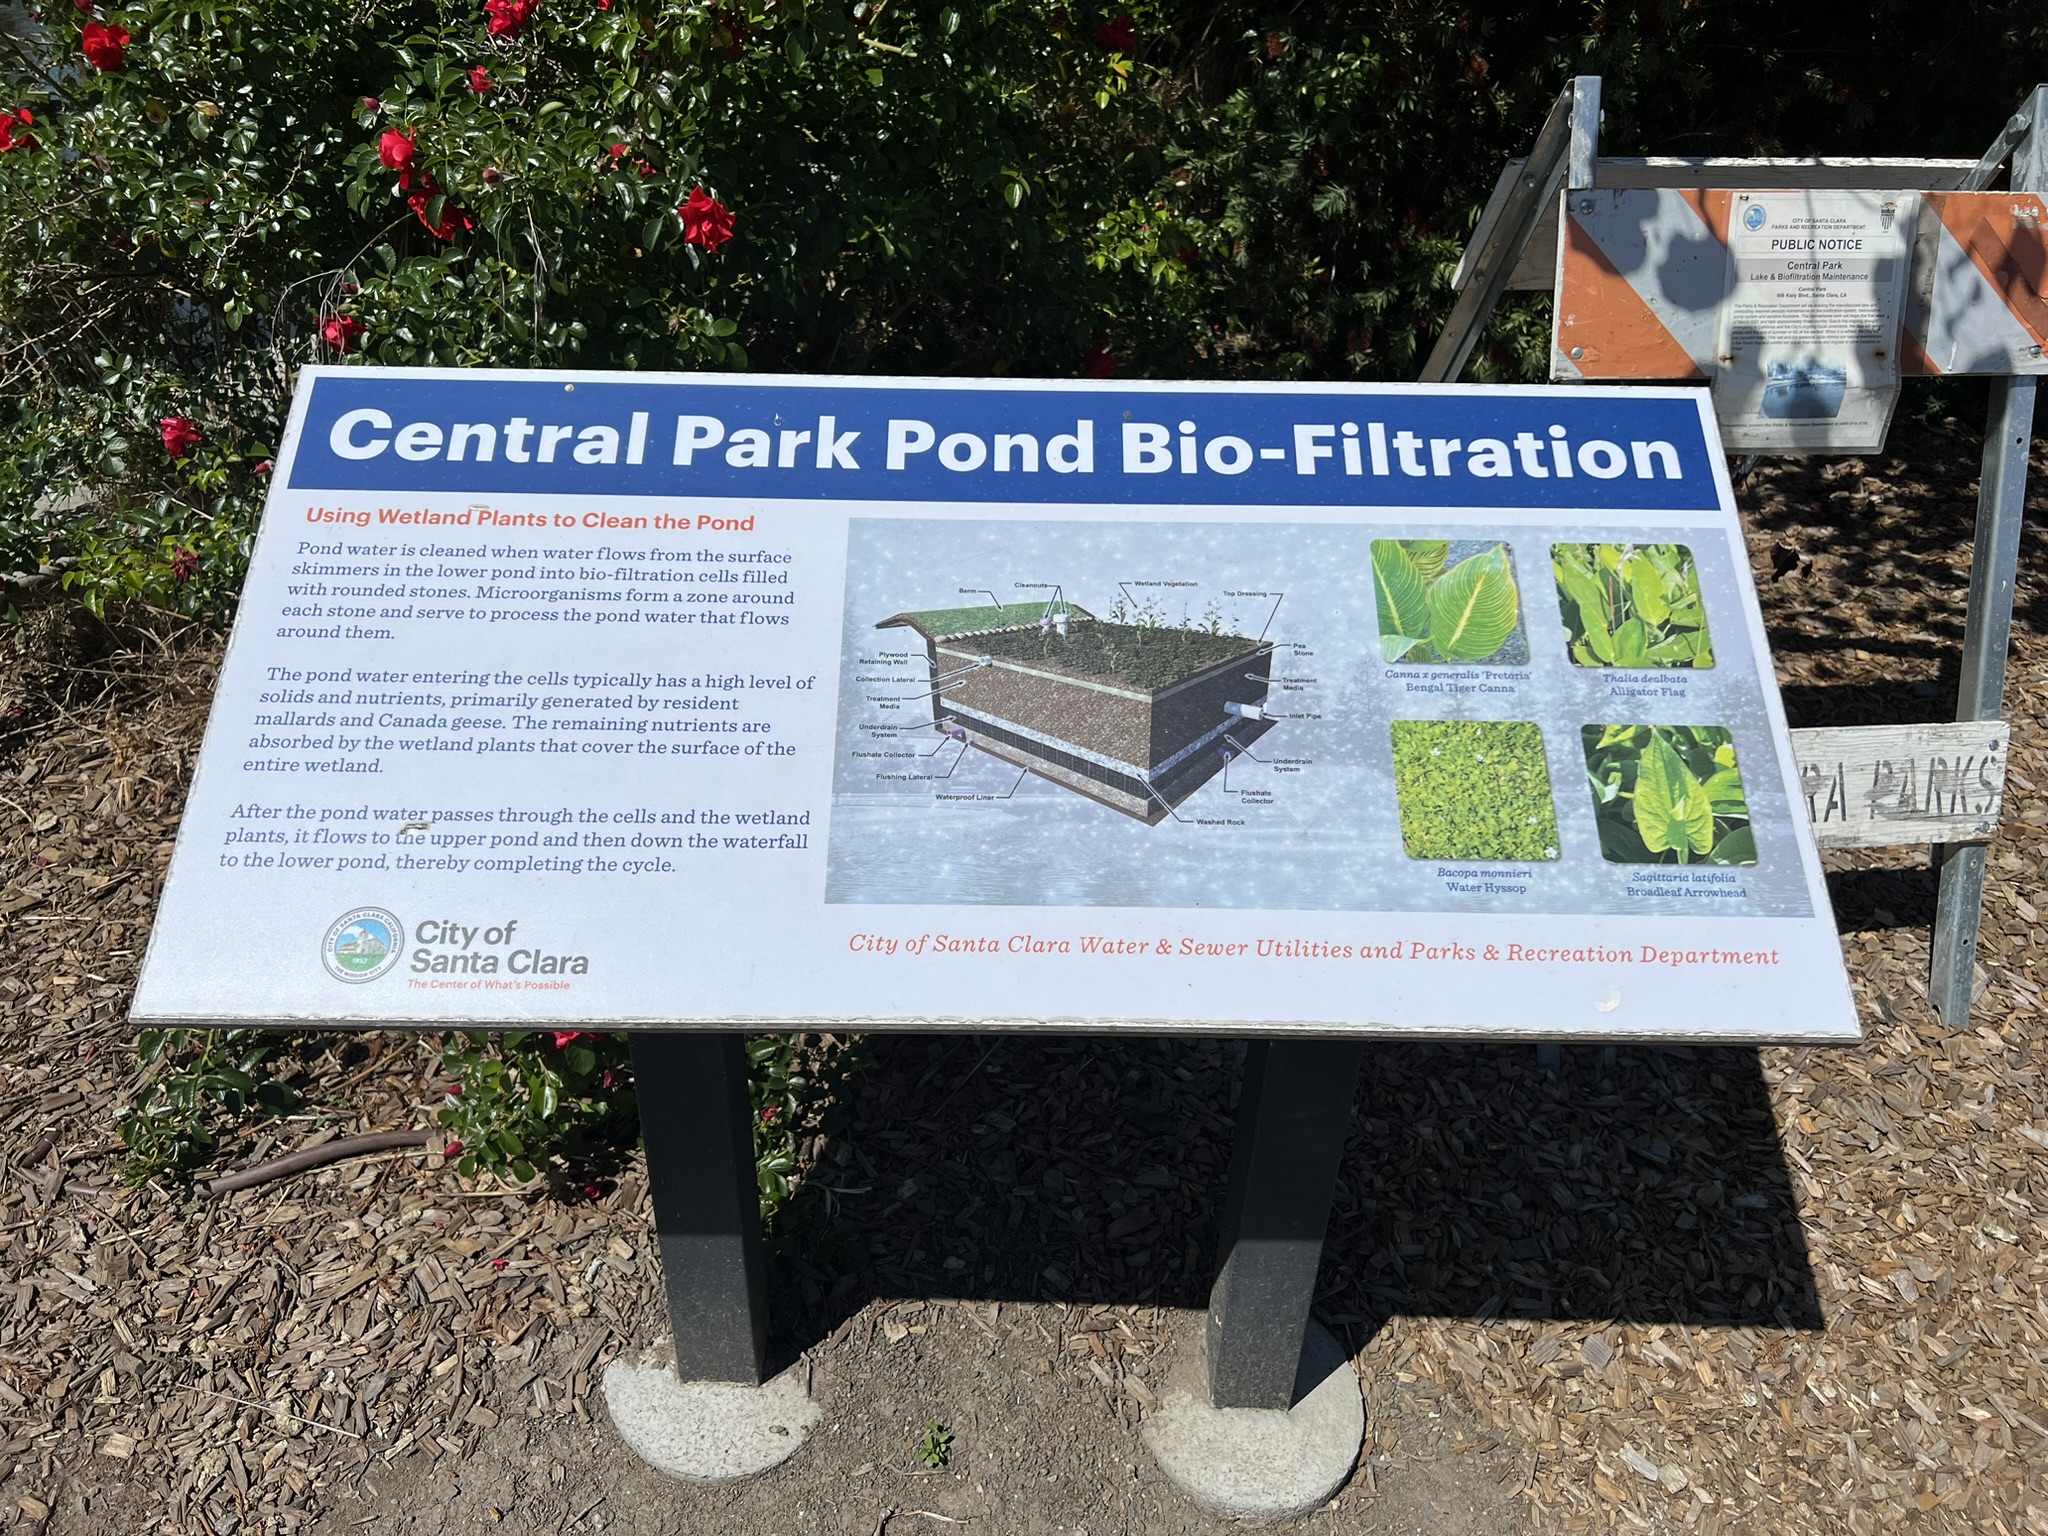 Pond Bio-Filtration